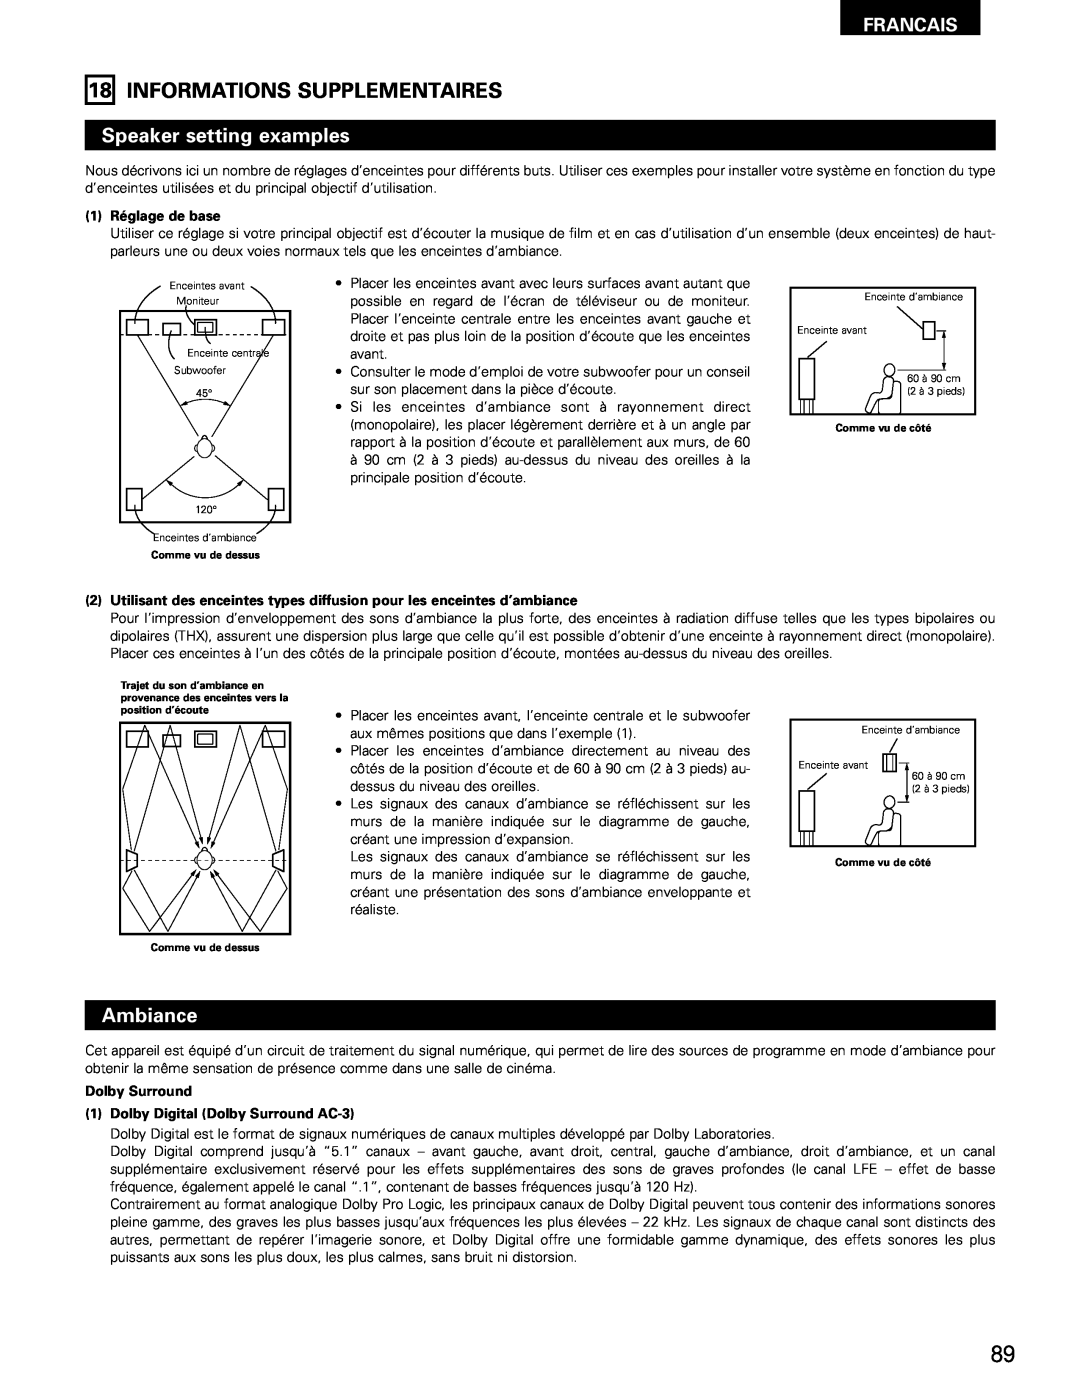 Denon AVR-1802/882 manual Informations Supplementaires, Speaker setting examples, Ambiance, Francais, 1Réglage de base 